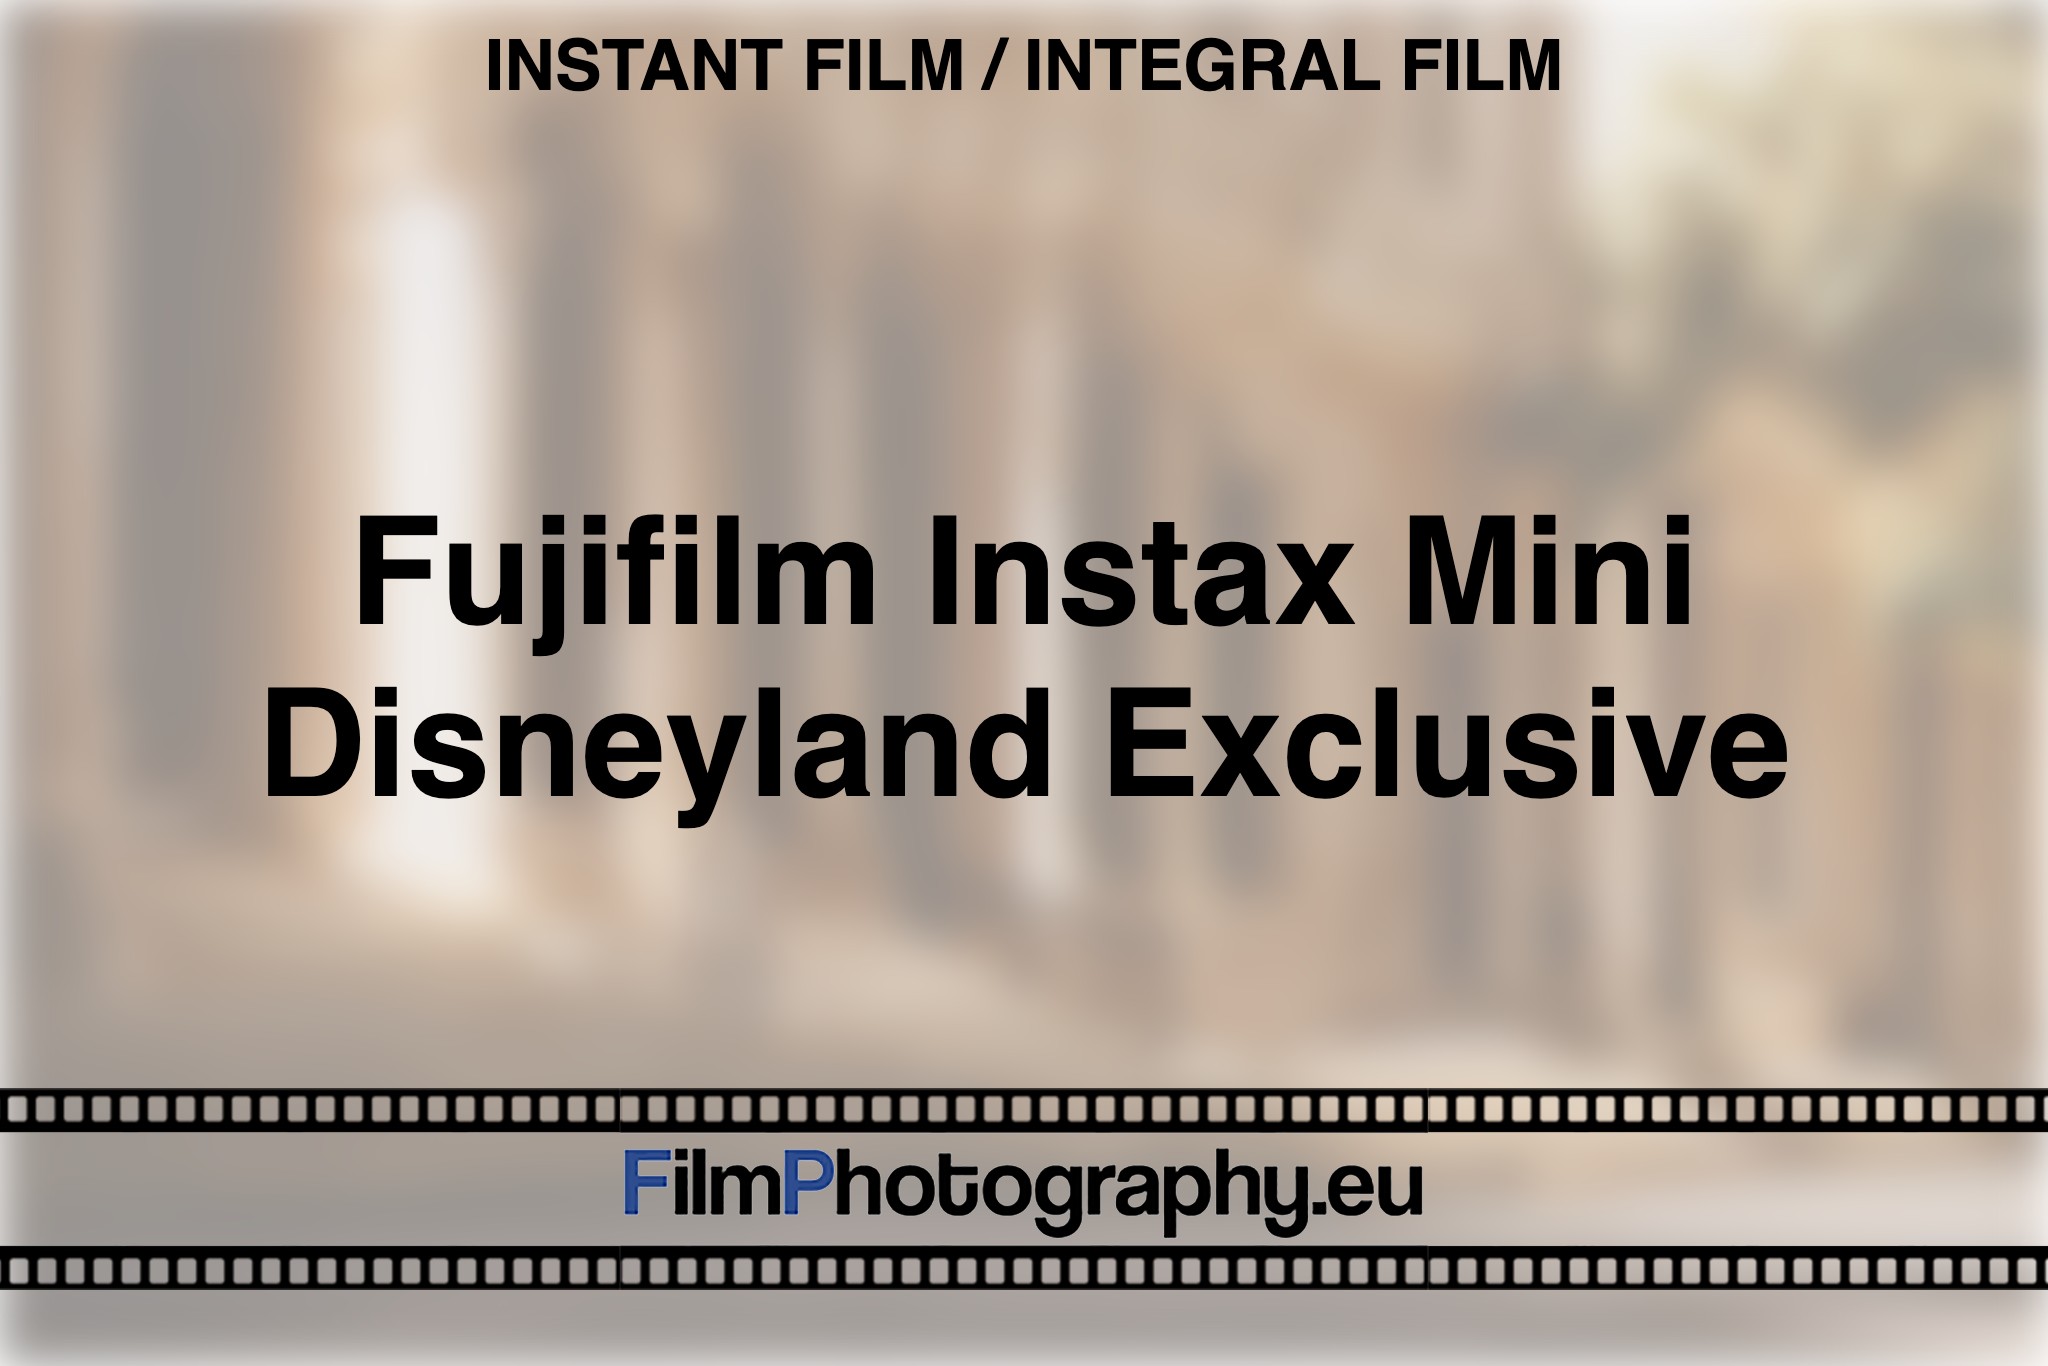 fujifilm-instax-mini-disneyland-exclusive-instant-film-integral-film-bnv